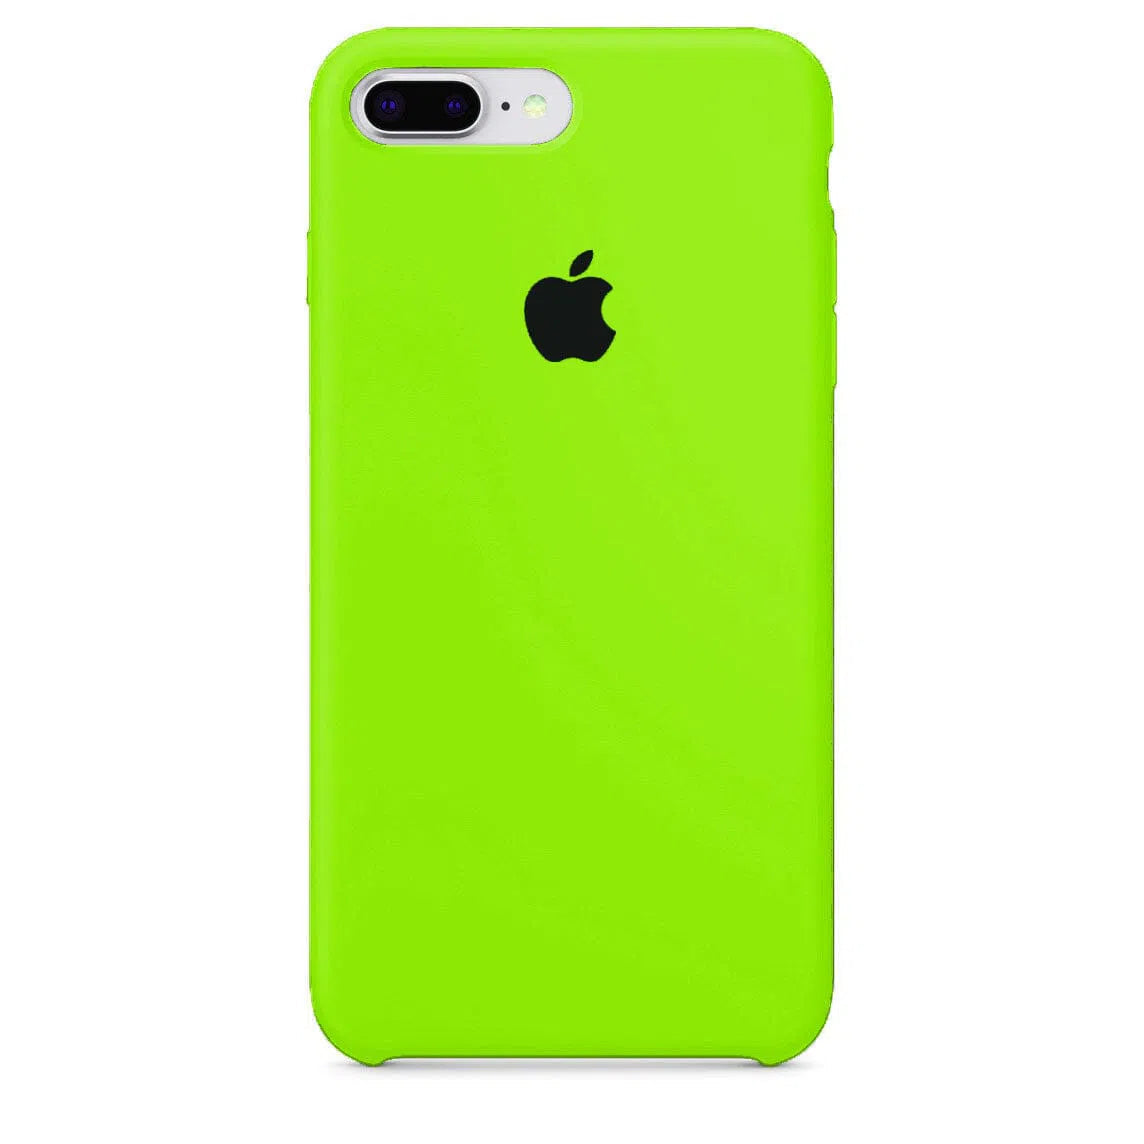 Husa iPhone Silicone Case Crazy Green (Verde) Anca's Store 7Plus/8Plus 